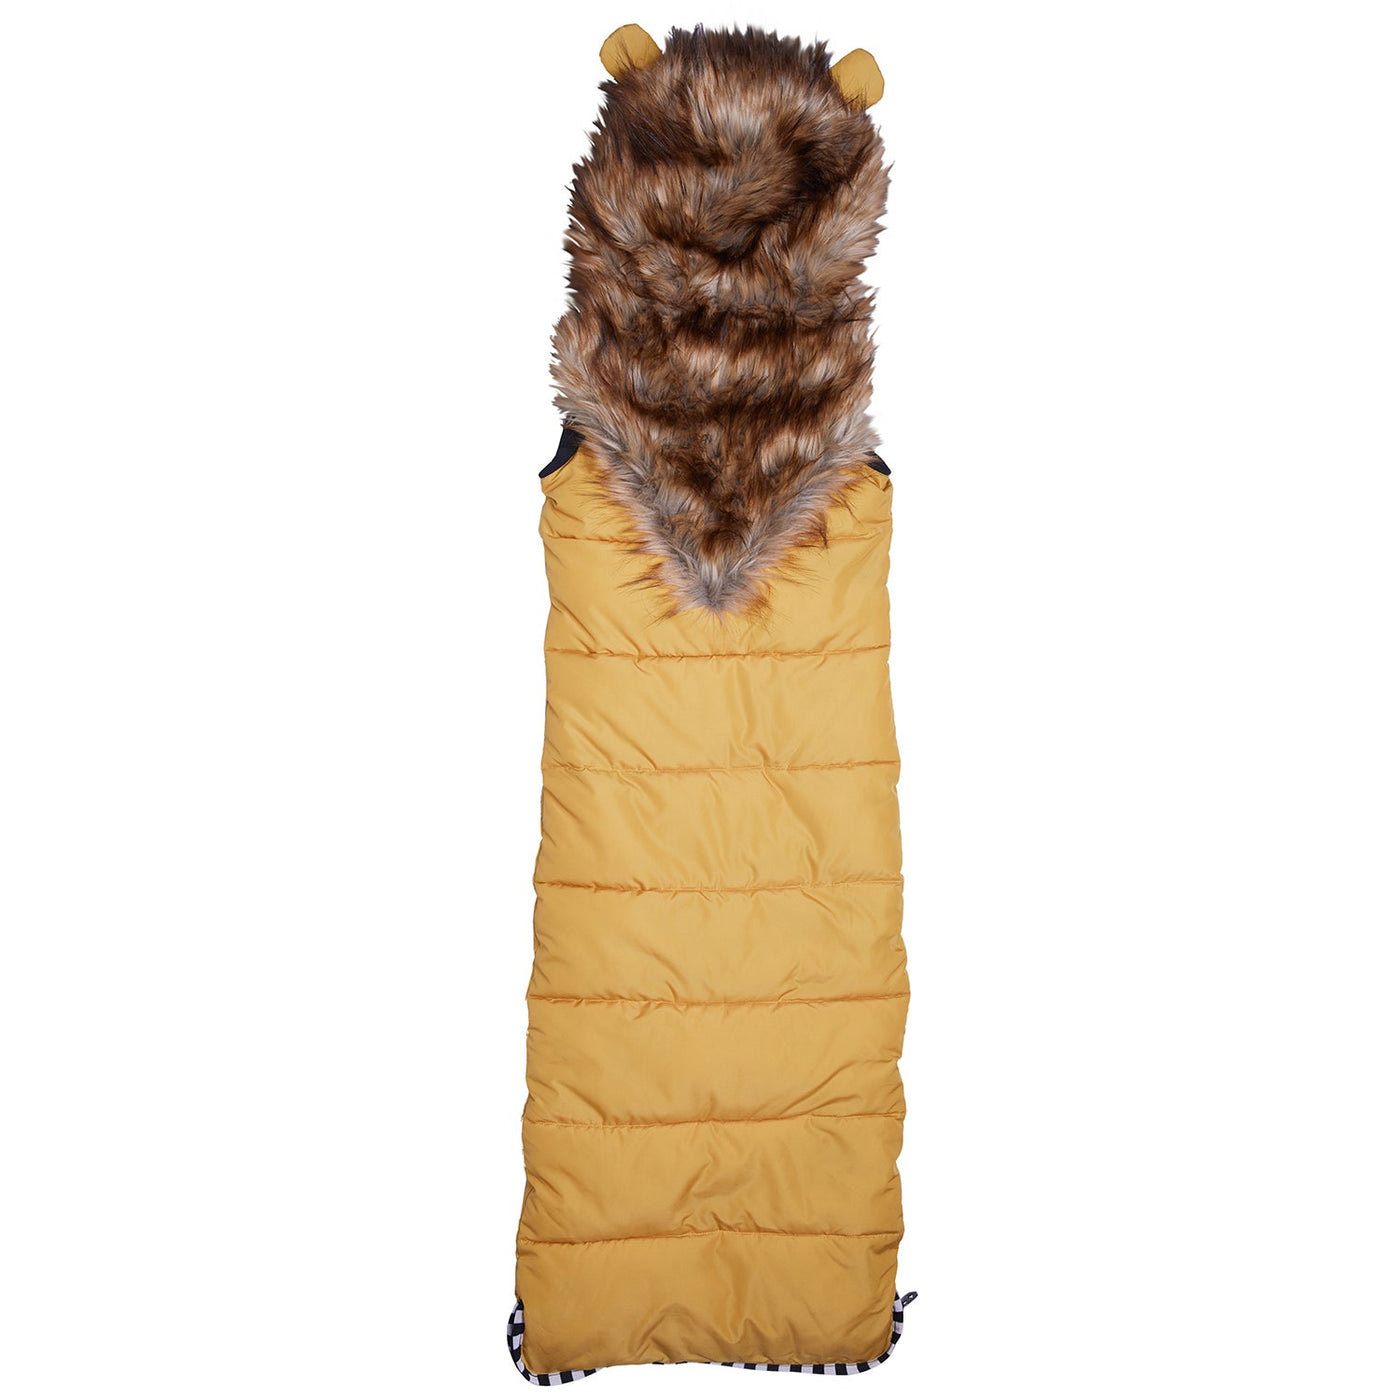 WeeDo Kids Sleeping Bag Lion  - Last One Left - Size 104cm